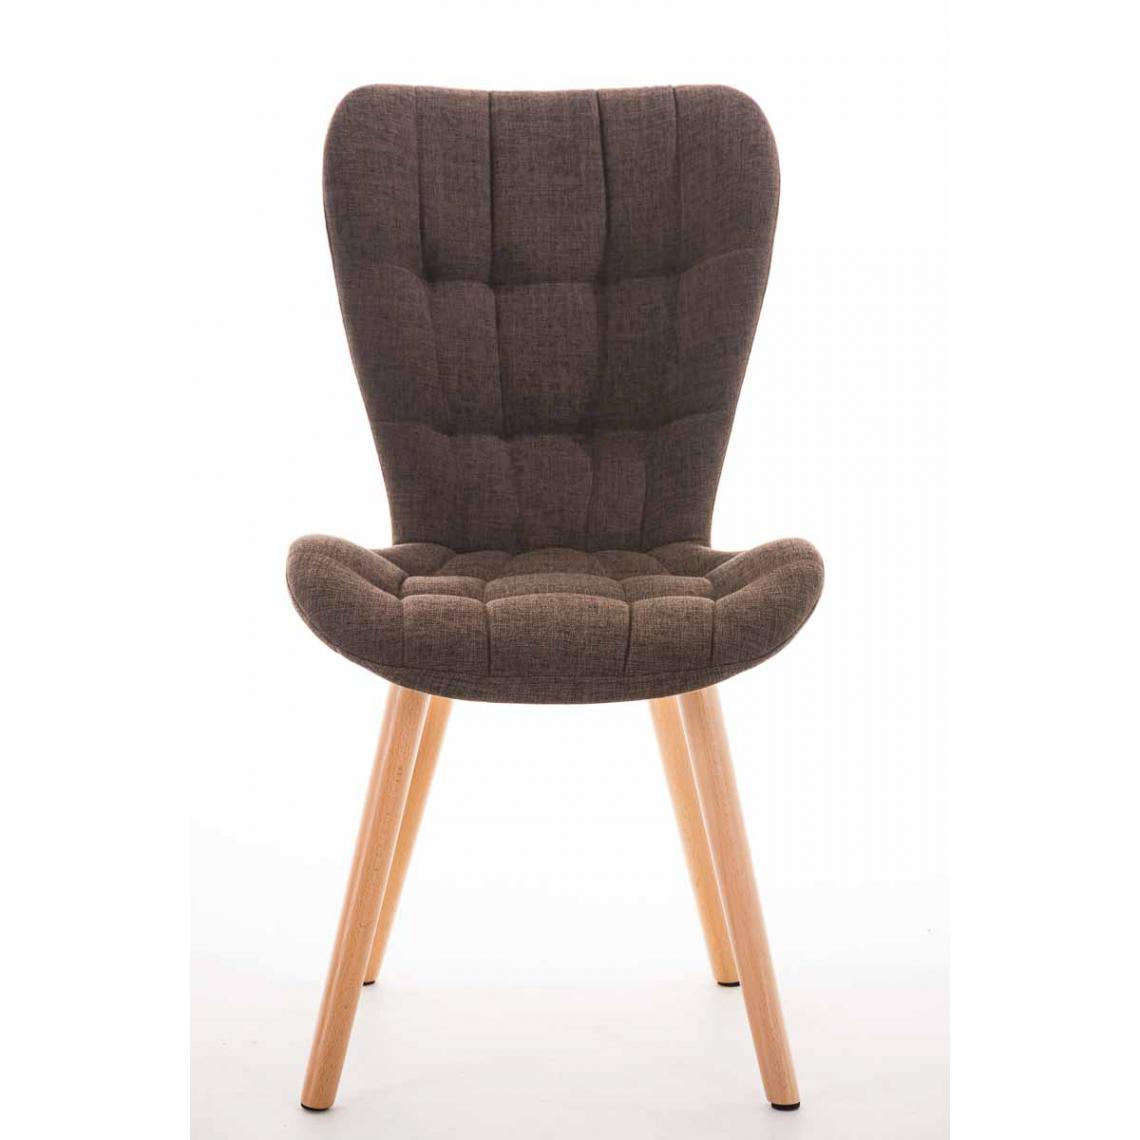 Icaverne - Moderne Chaise serie Khartoum tissu natura couleur marron - Chaises